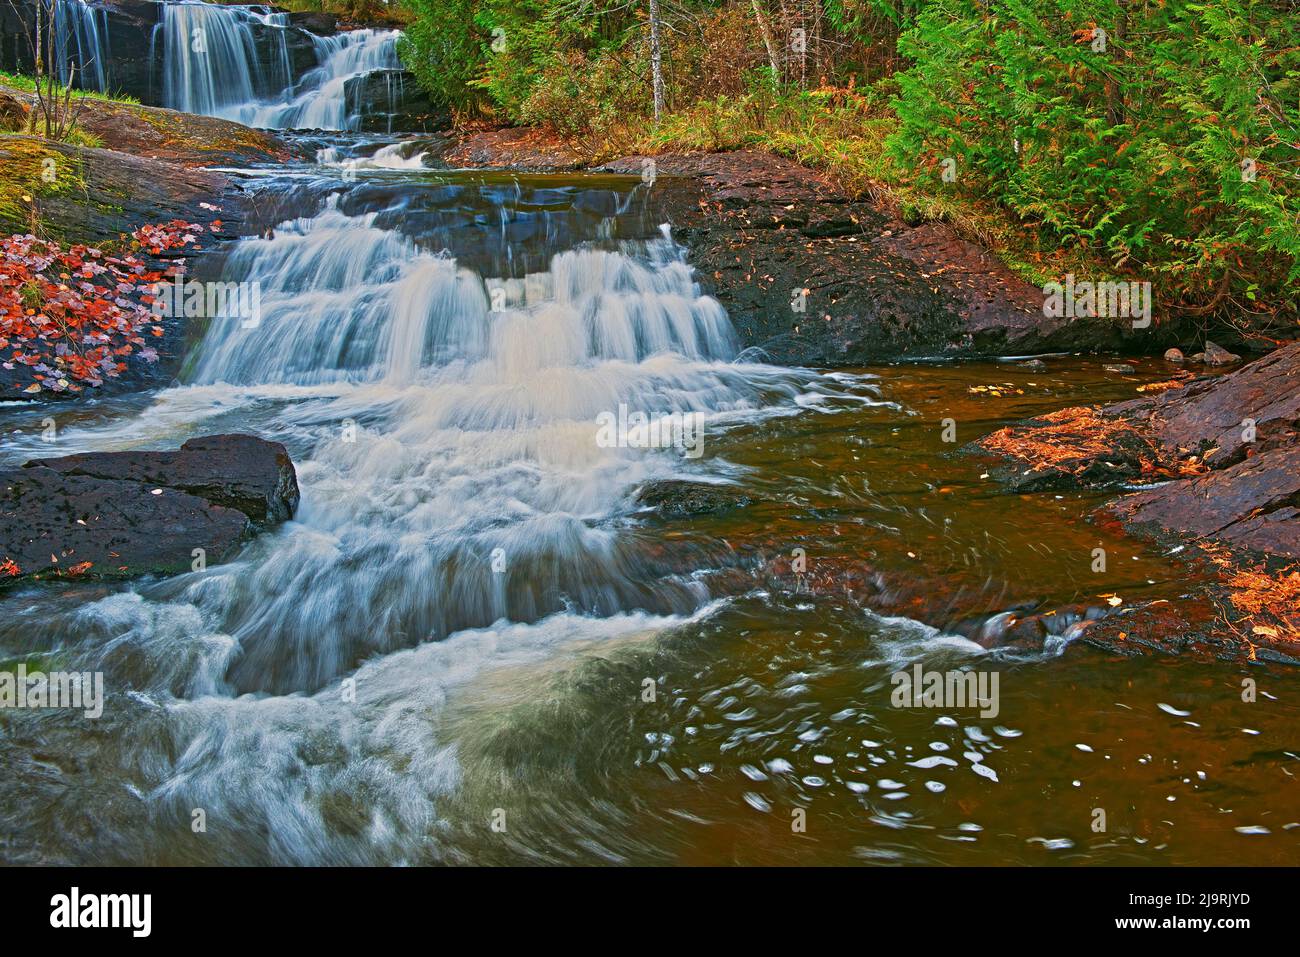 Canada, Ontario, Ignace. Raleigh Falls rapids. Stock Photo